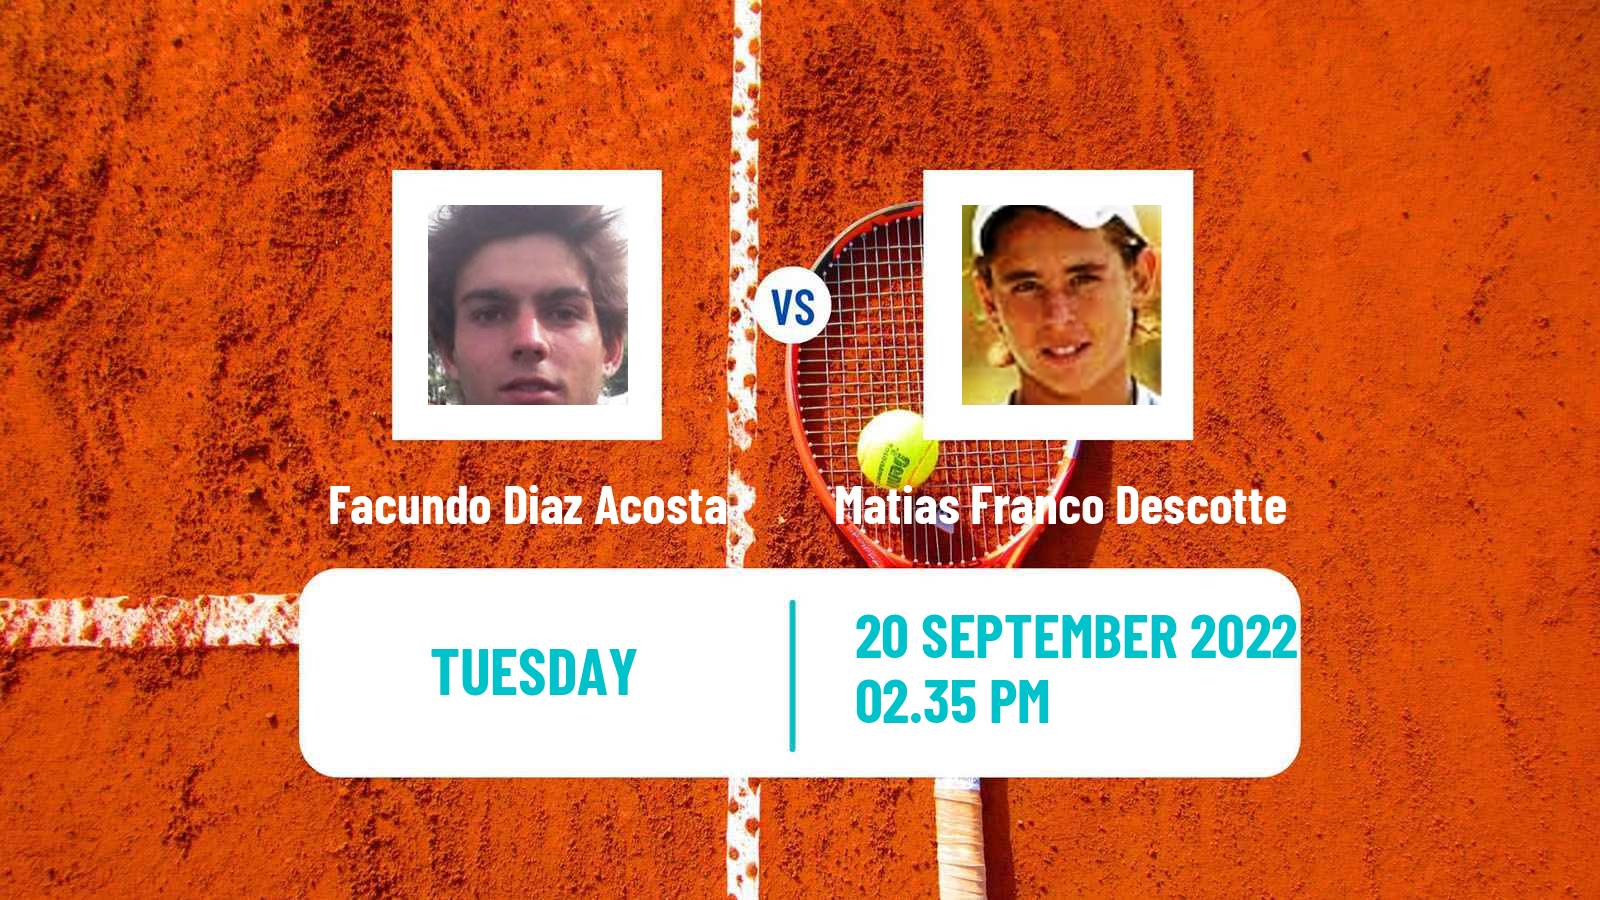 Tennis ATP Challenger Facundo Diaz Acosta - Matias Franco Descotte